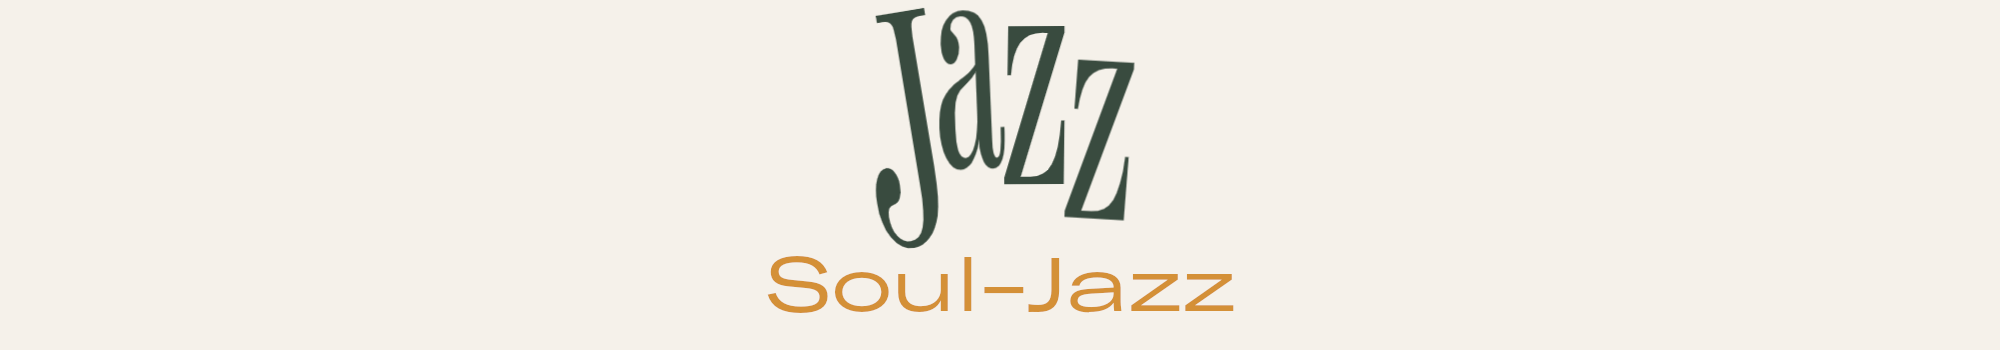 Rubrik till kategori: Jazz - Soul-Jazz